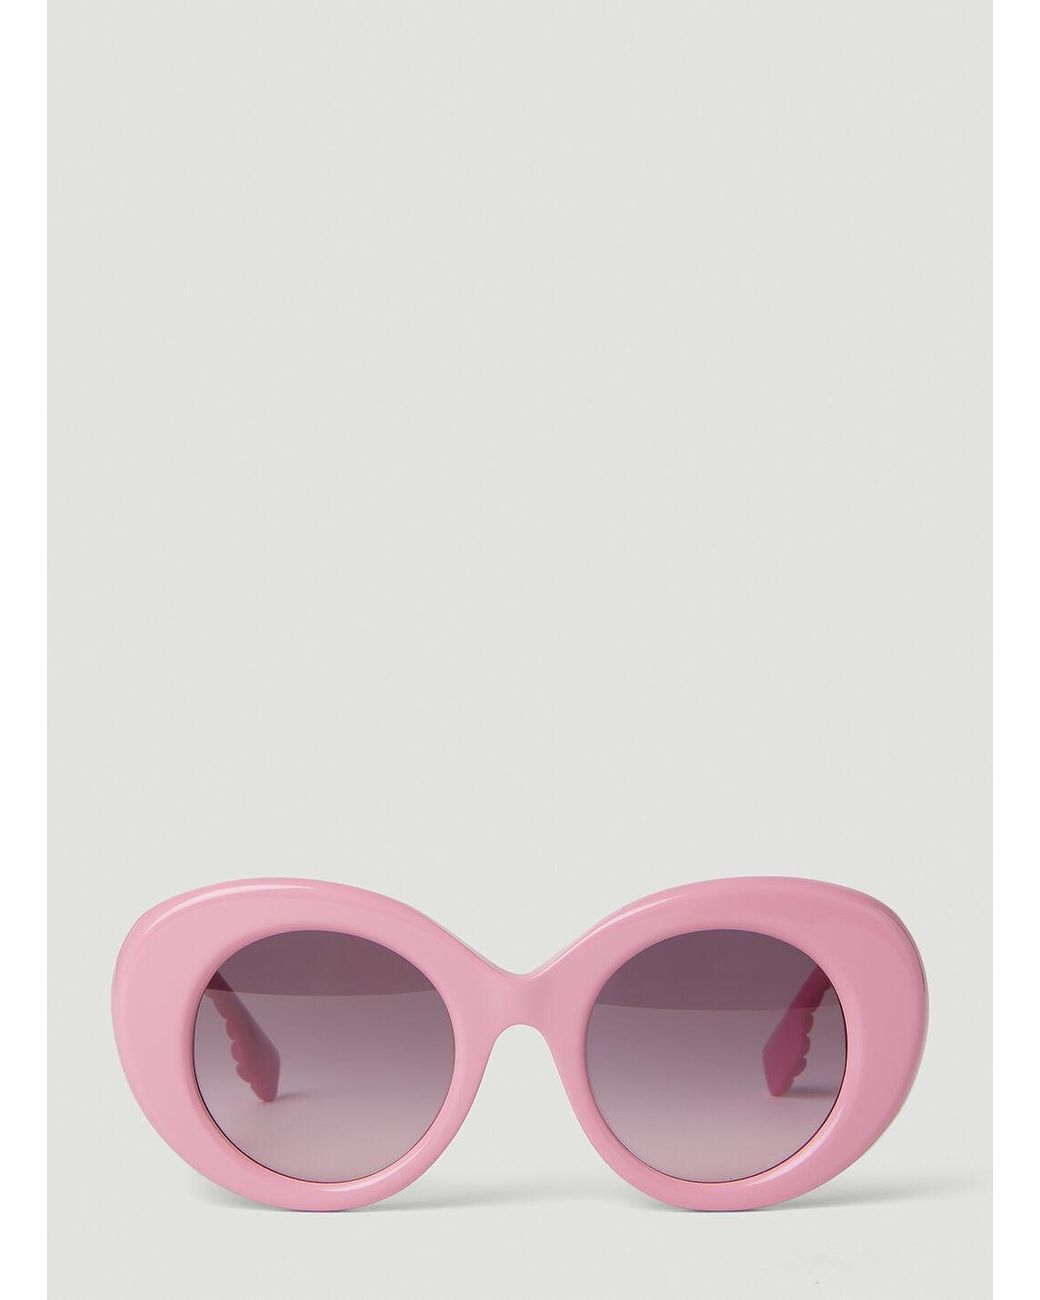 Burberry Margot Sunglasses in Pink | Lyst Australia